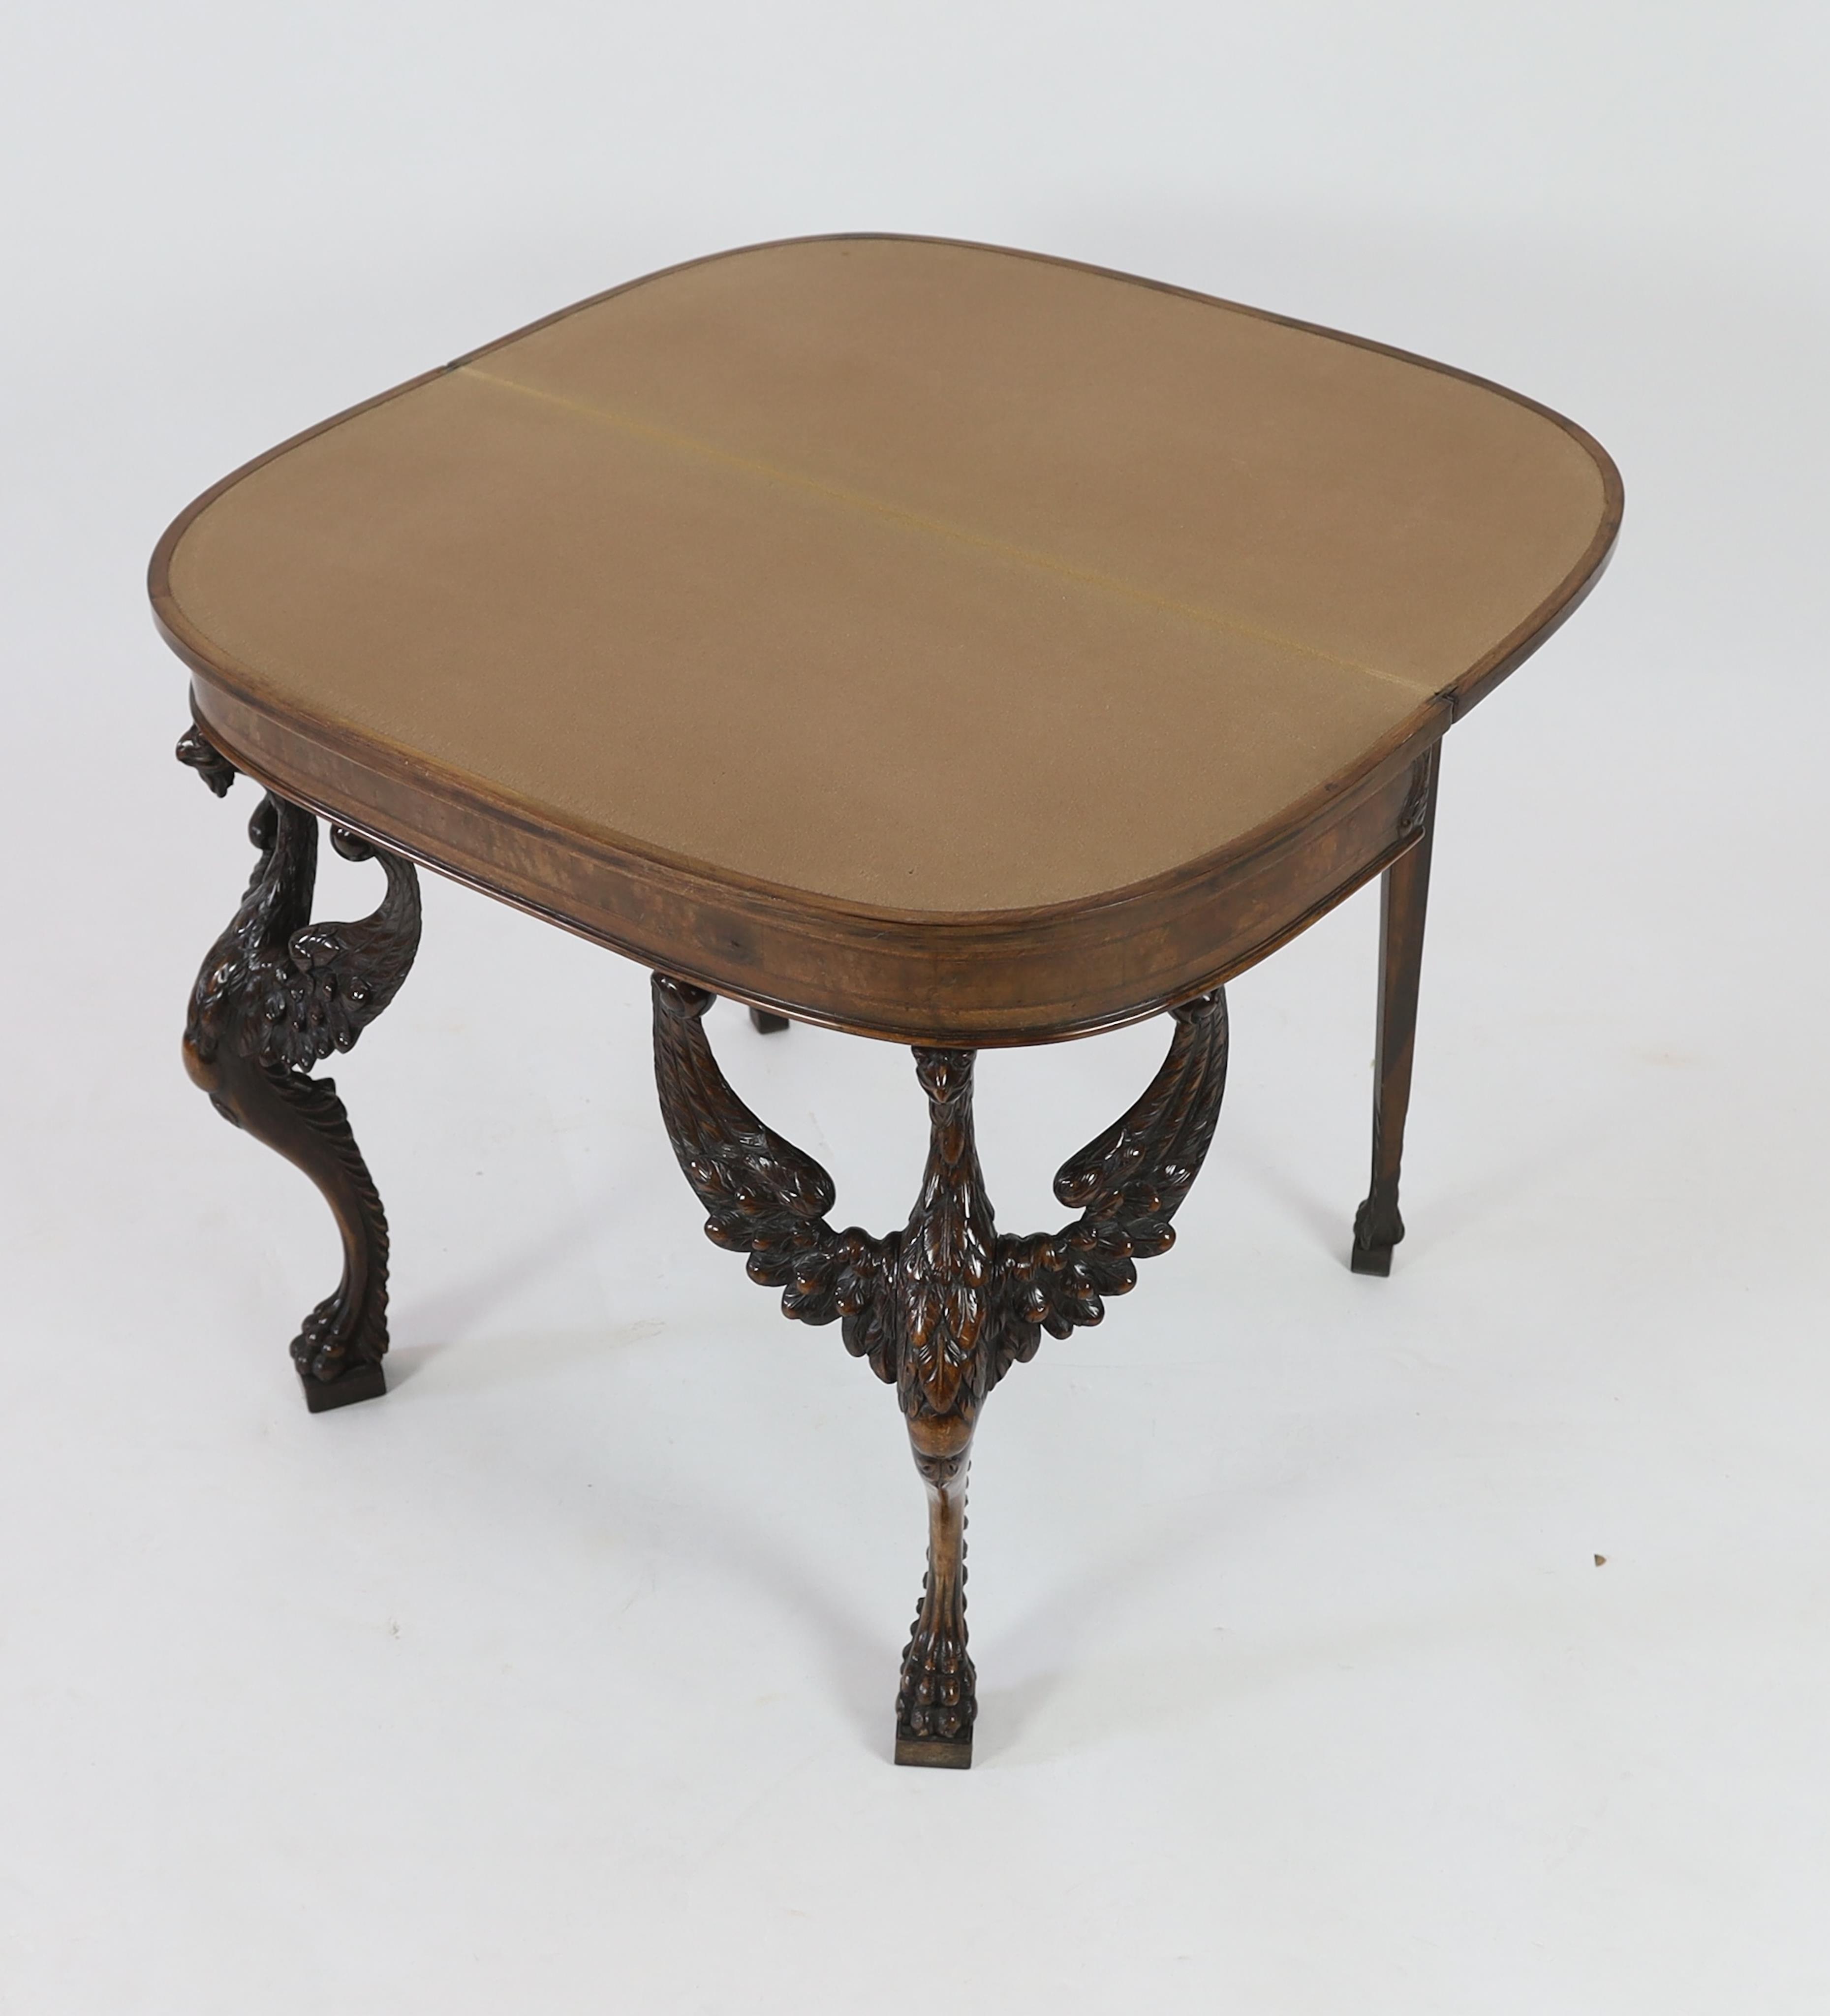 A mid 18th century style walnut card table